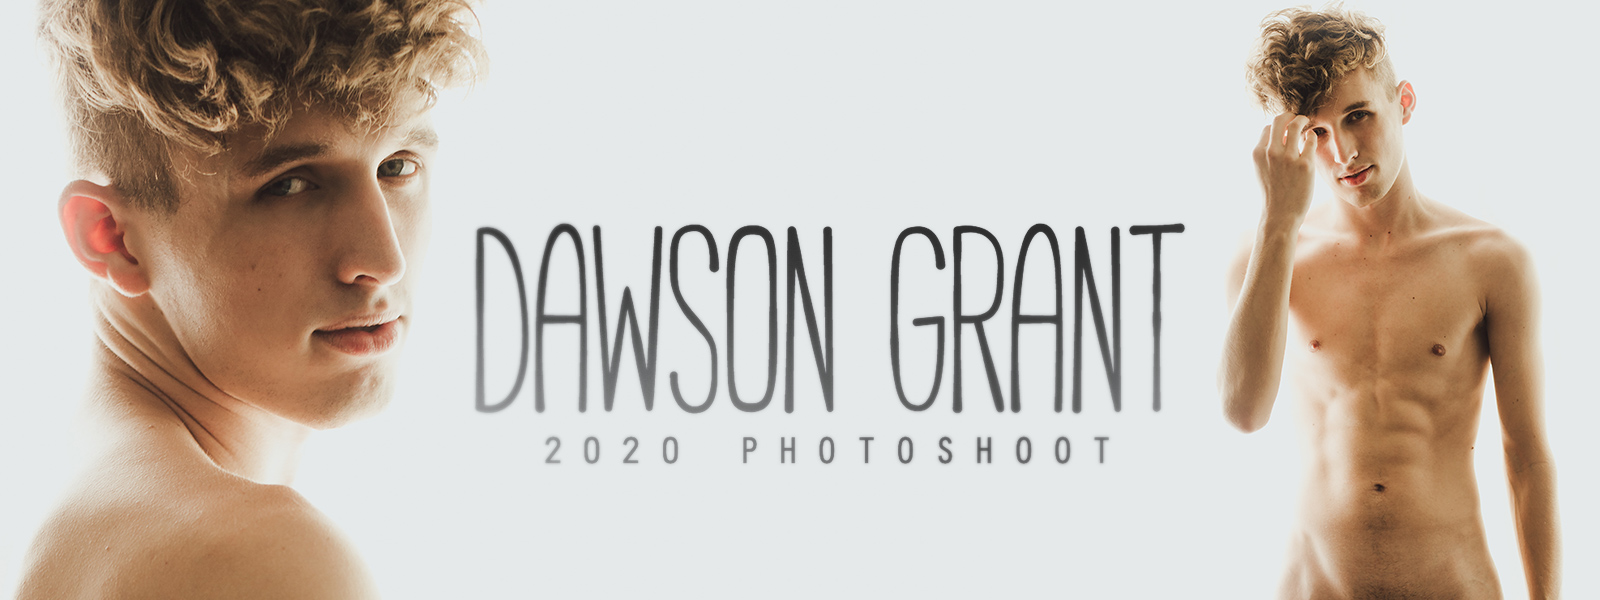 Dawson Grant 2020 Photoshoot